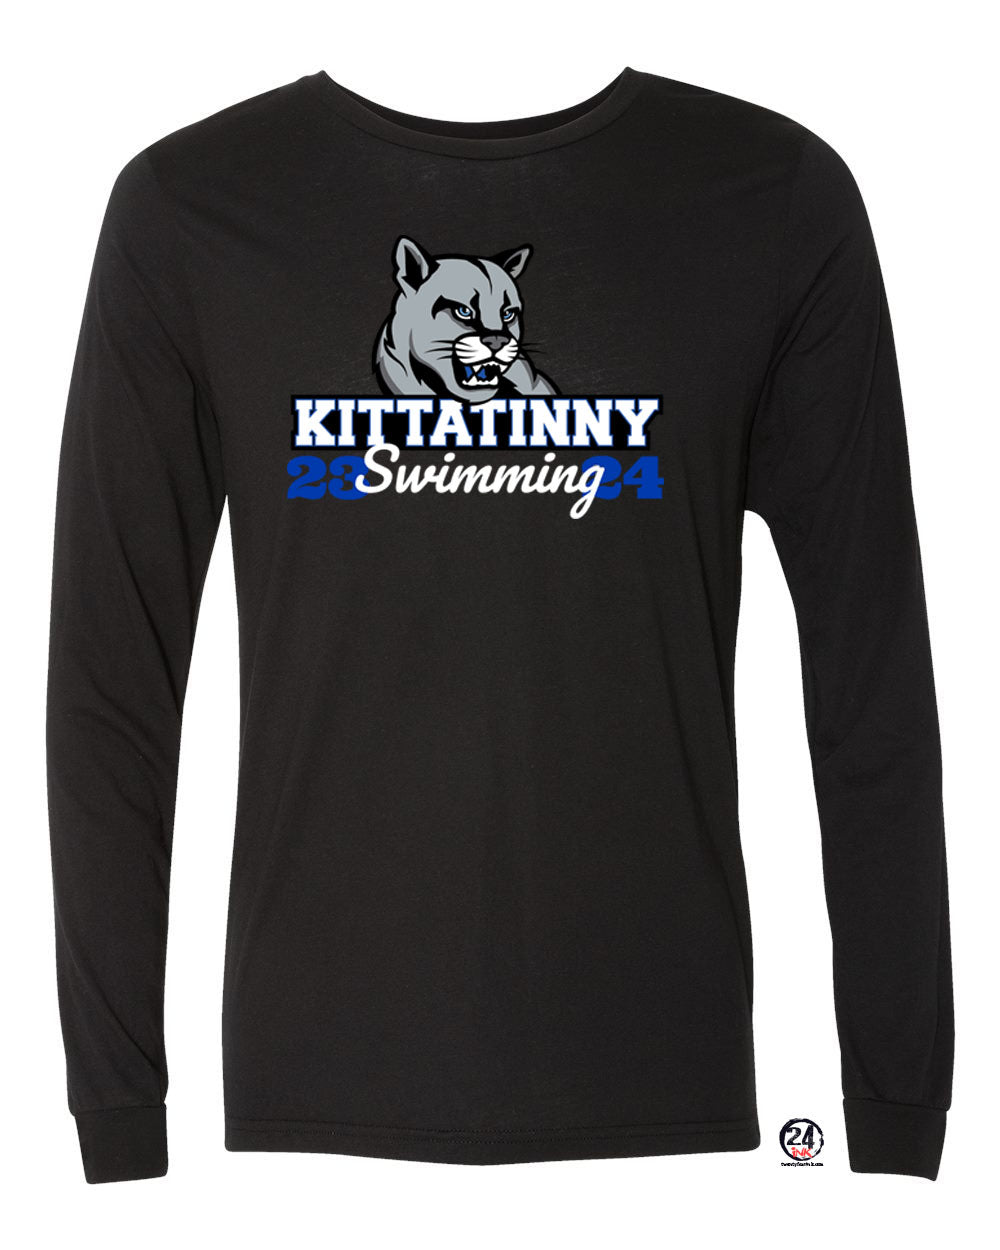 Kittatinny Swimming Design 2 Long Sleeve Shirt